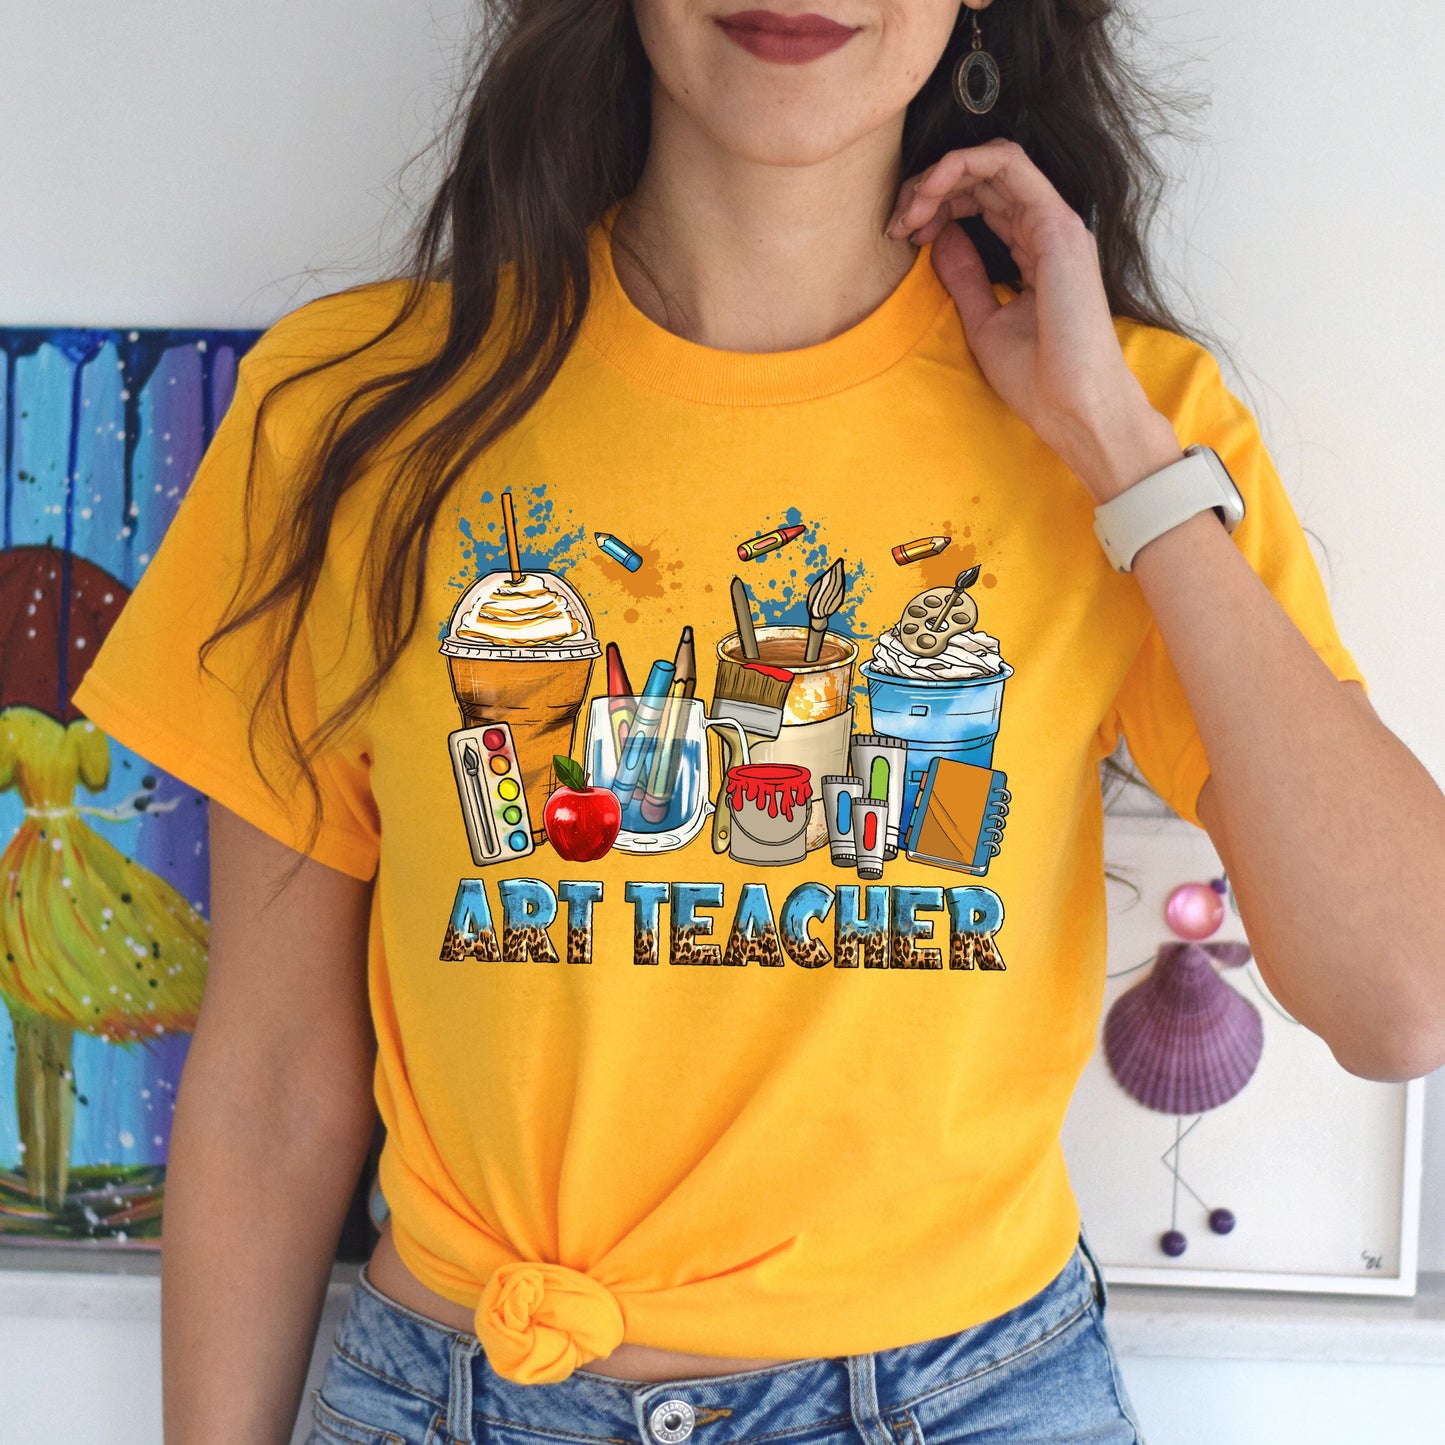 Art teacher coffee cups unisex tshirt art educator tee S-5XL-Family-Gift-Planet